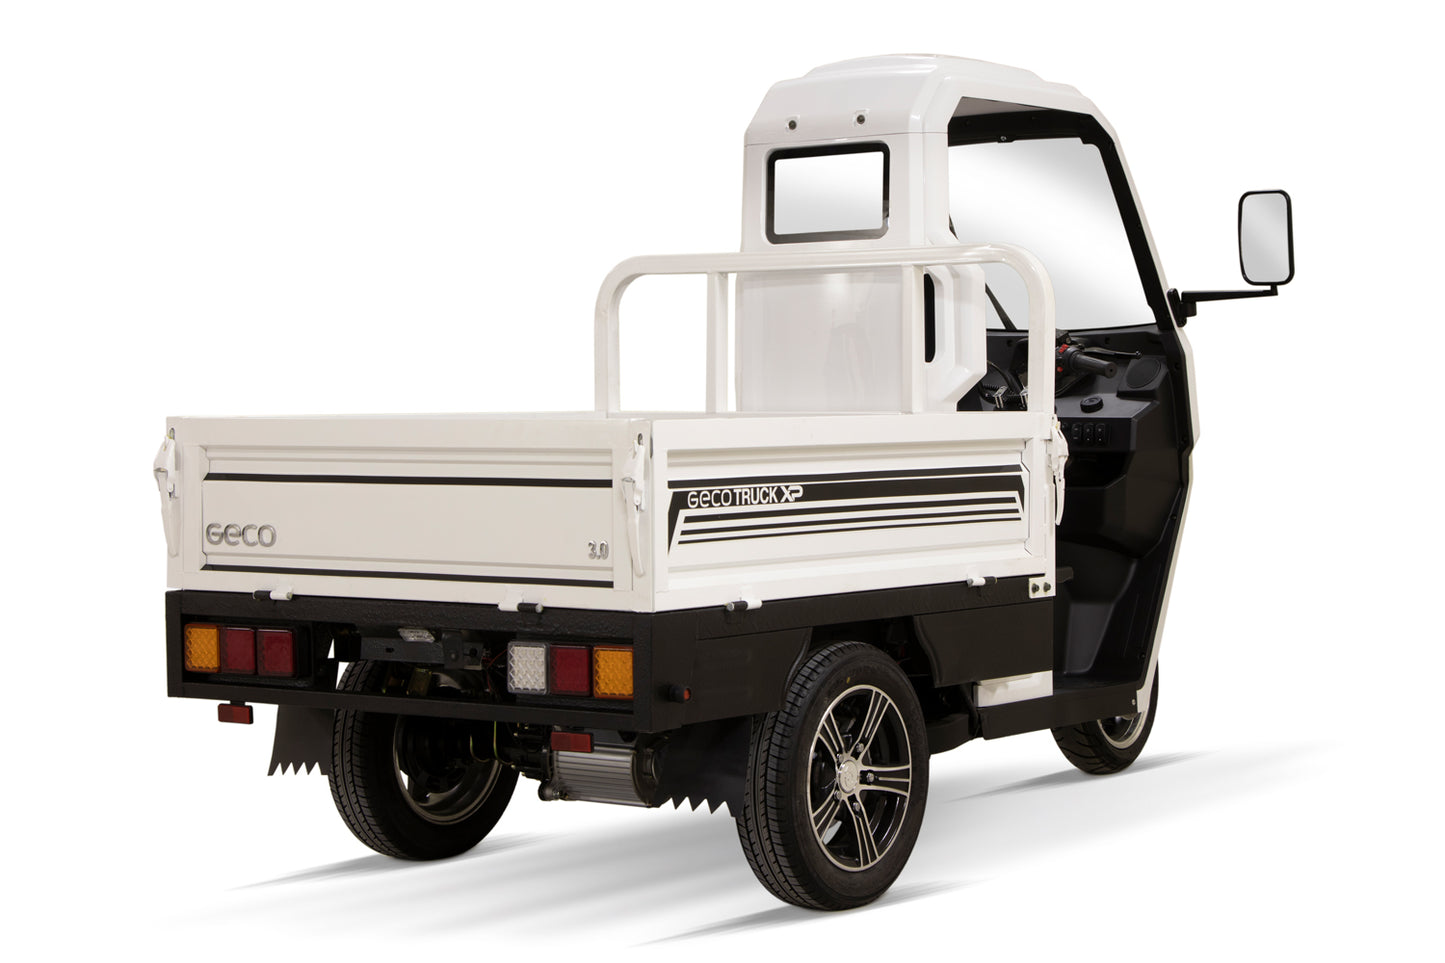 LiFR Pickup Truck XP V9 3,1 kW/h | 72V 60AH